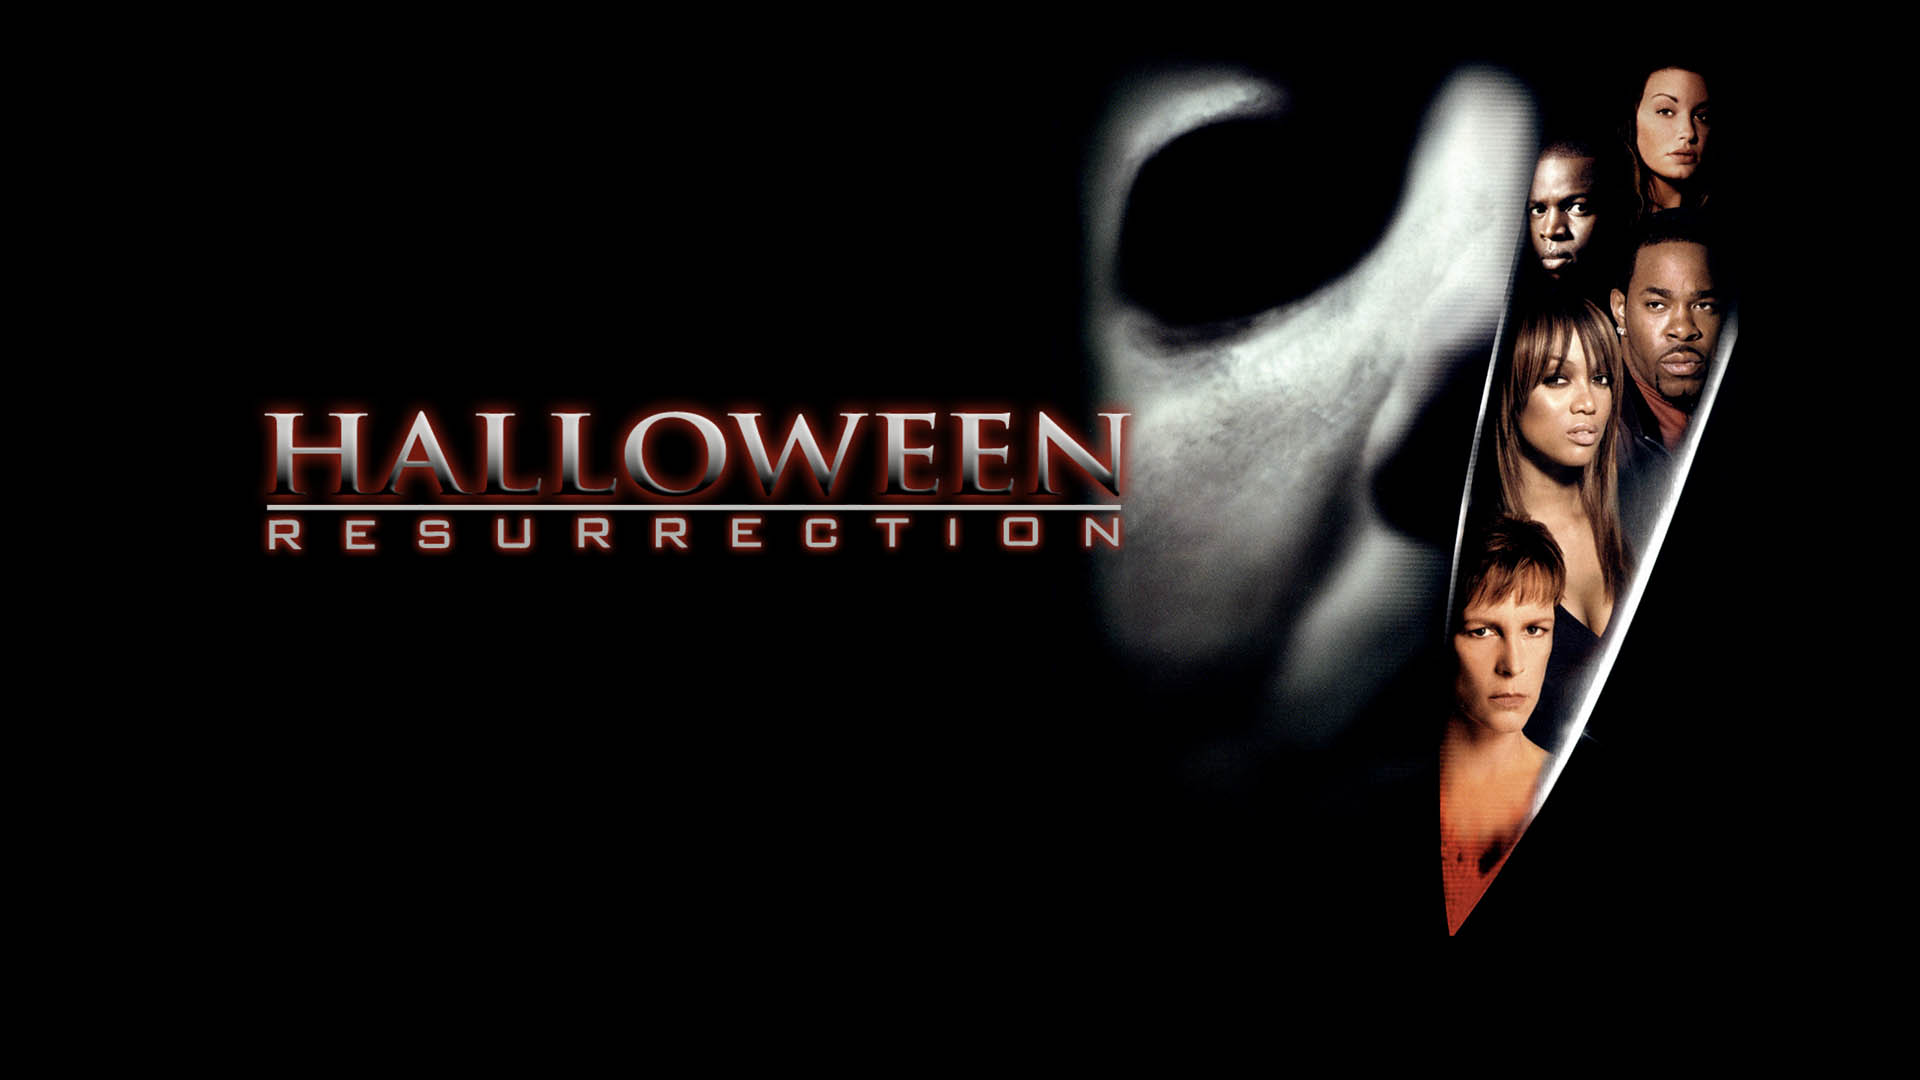 Watch Halloween: Resurrection Online | Stream Full Movies